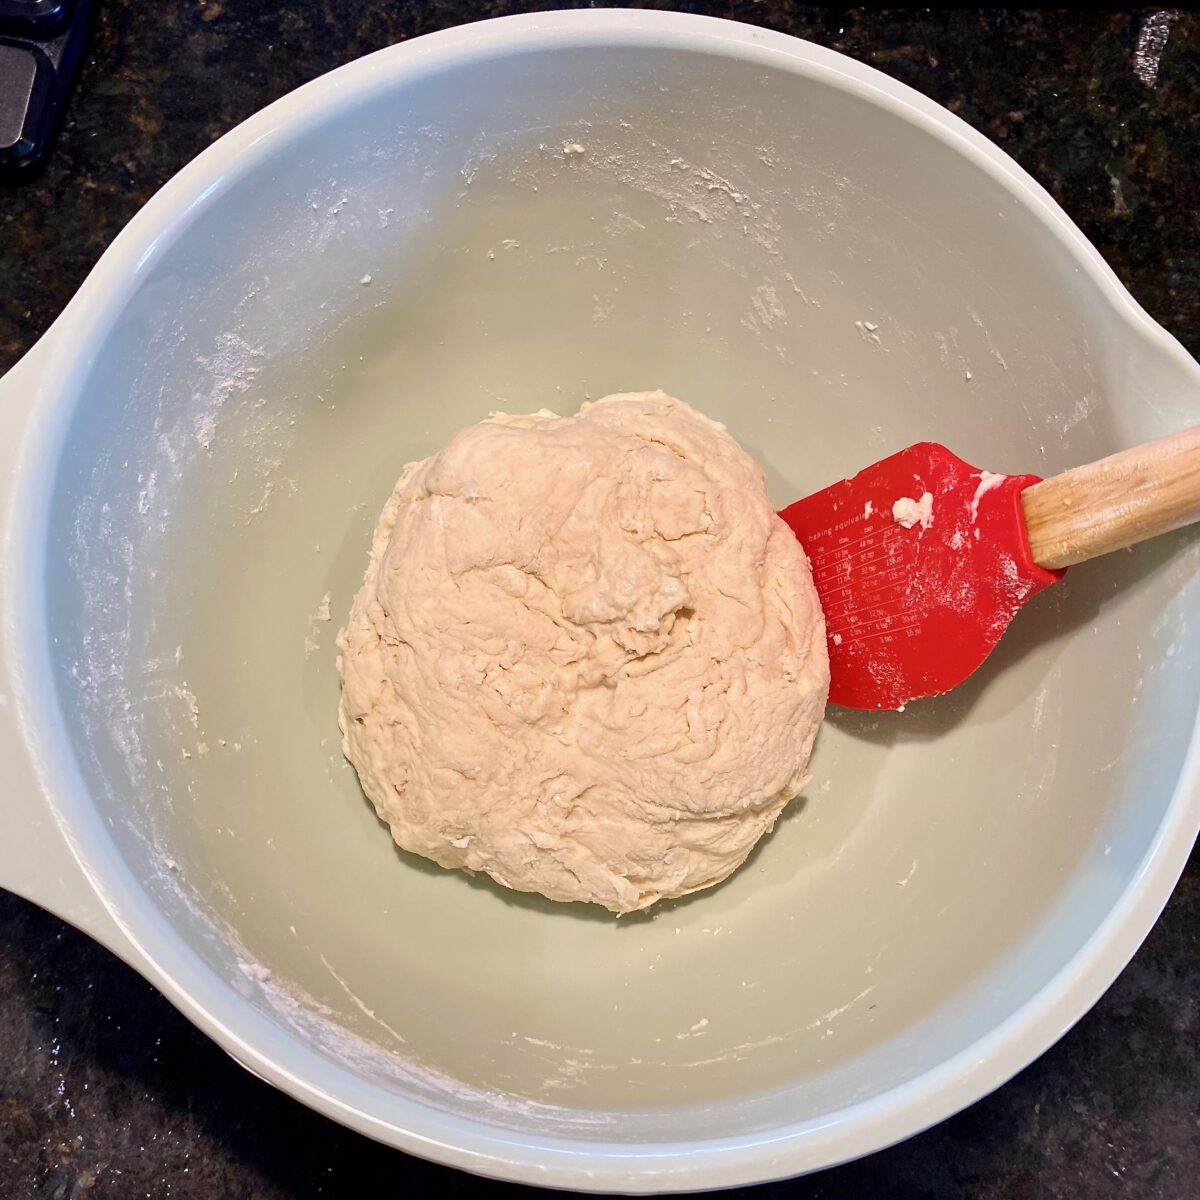 Using a silicone spatula to form a shaggy dough ball.